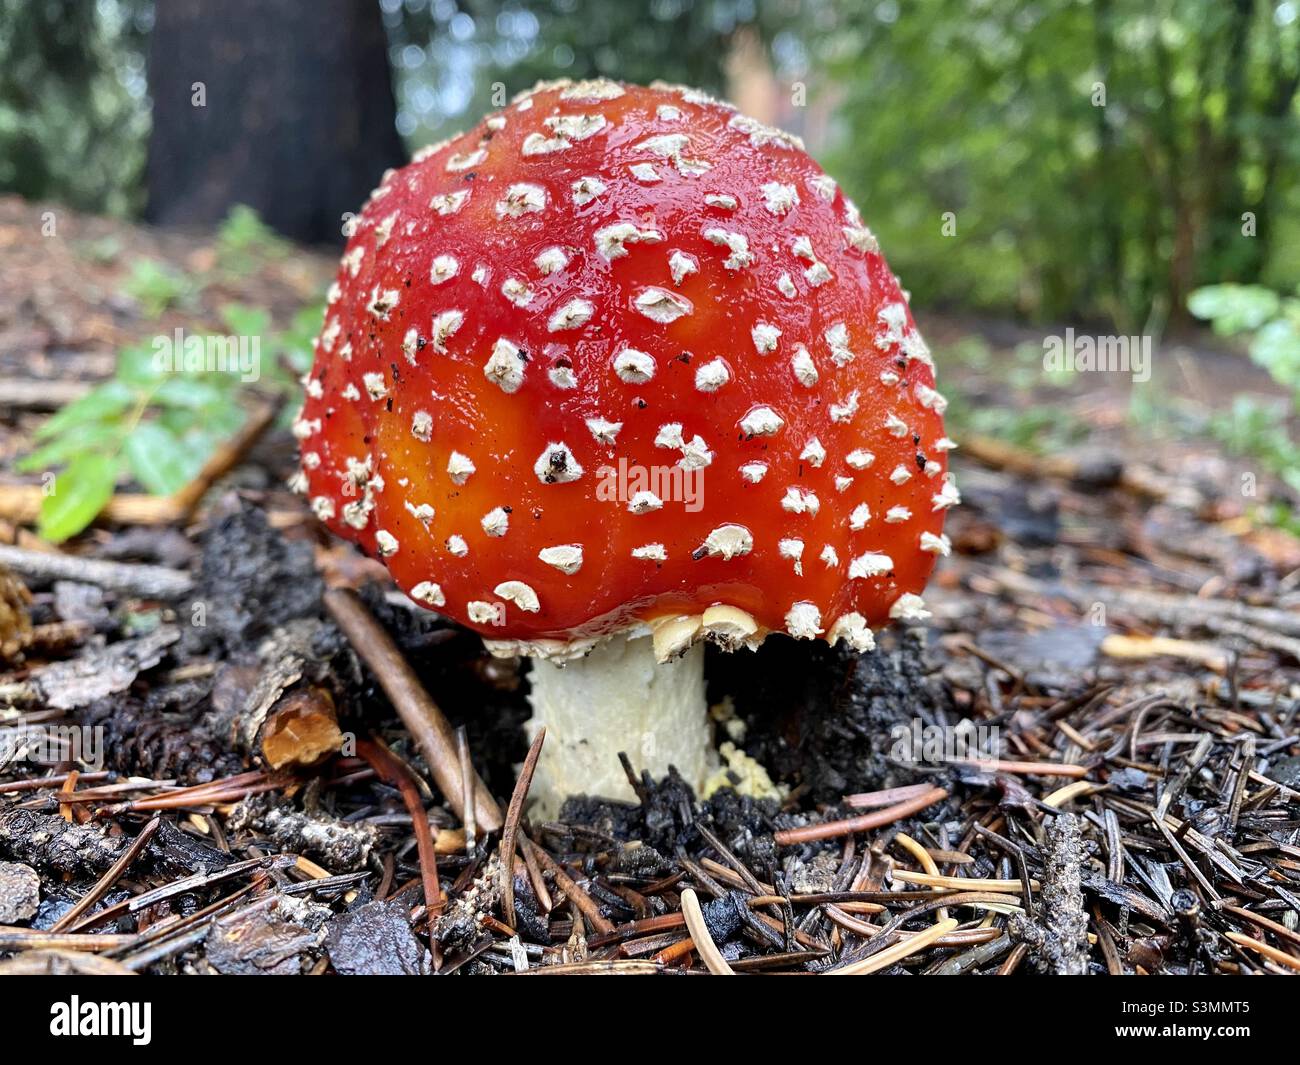 Amanita mushroom Stock Photo